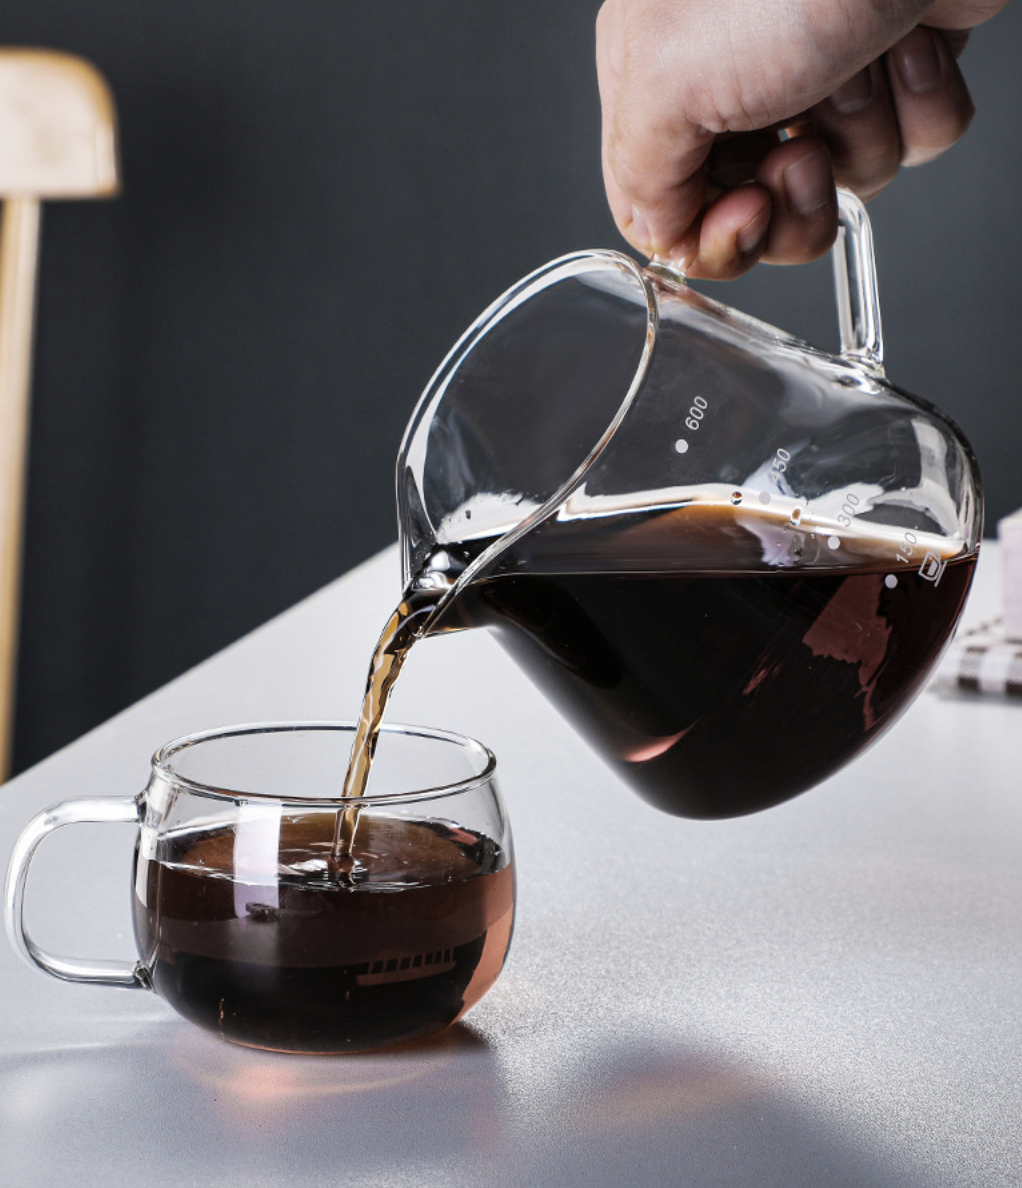 Glass hand brewed coffee pot set coffee filter cup sharing pot brewing pot coffee utensil 600ML coffee pot